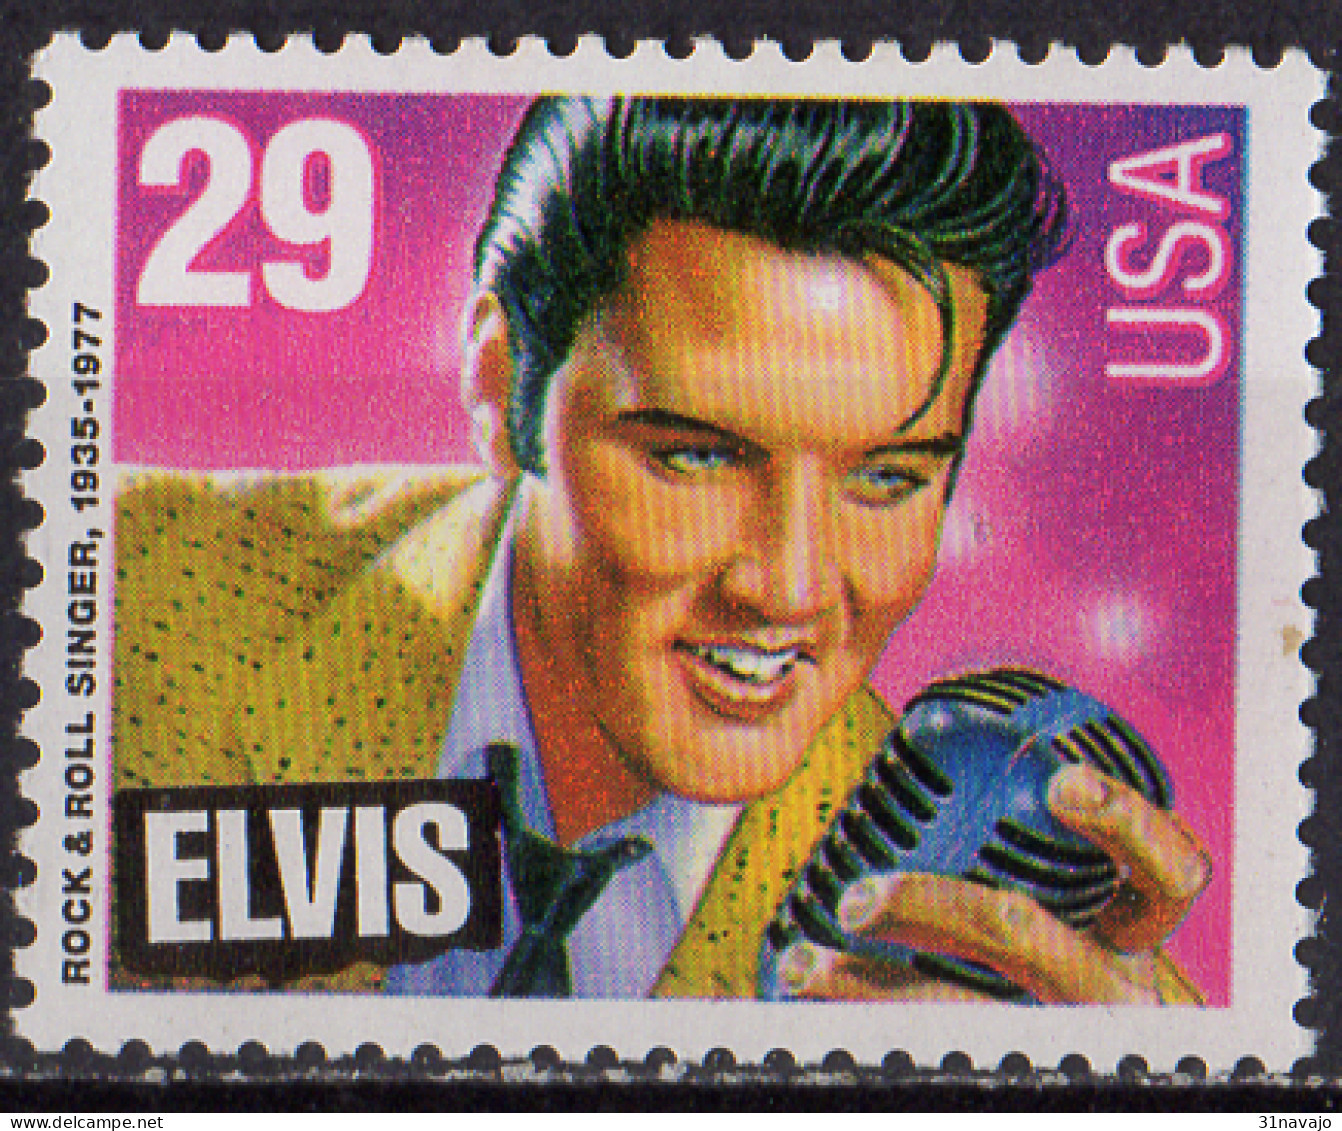 ETATS UNIS D'AMERIQUE - Elvis Presley - Elvis Presley